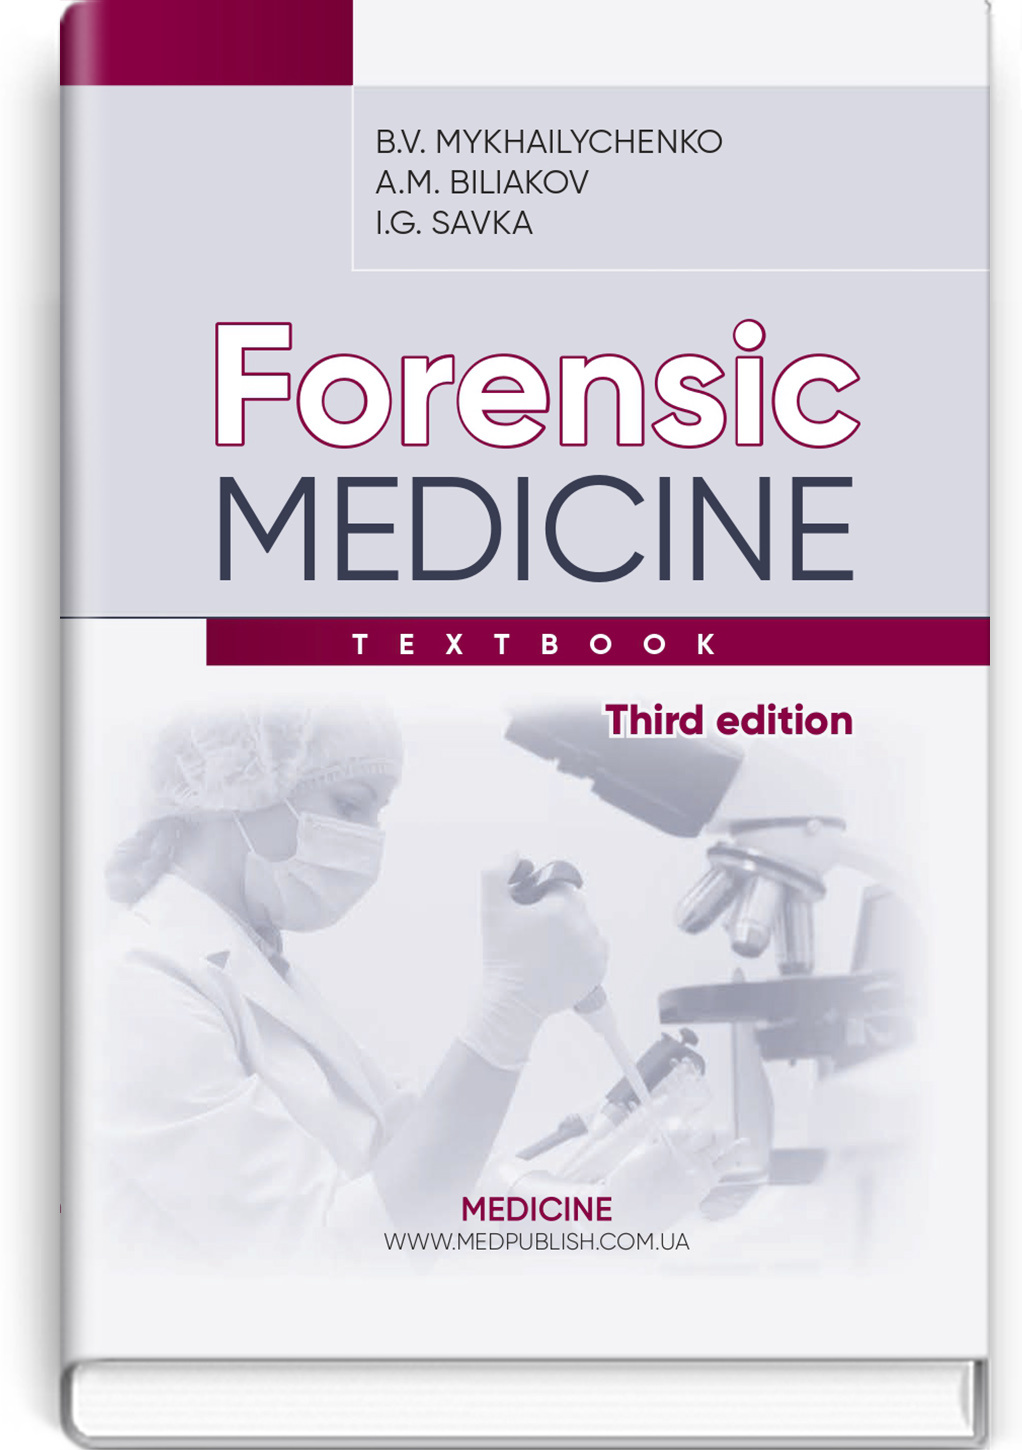 Forensic Medicine: textbook